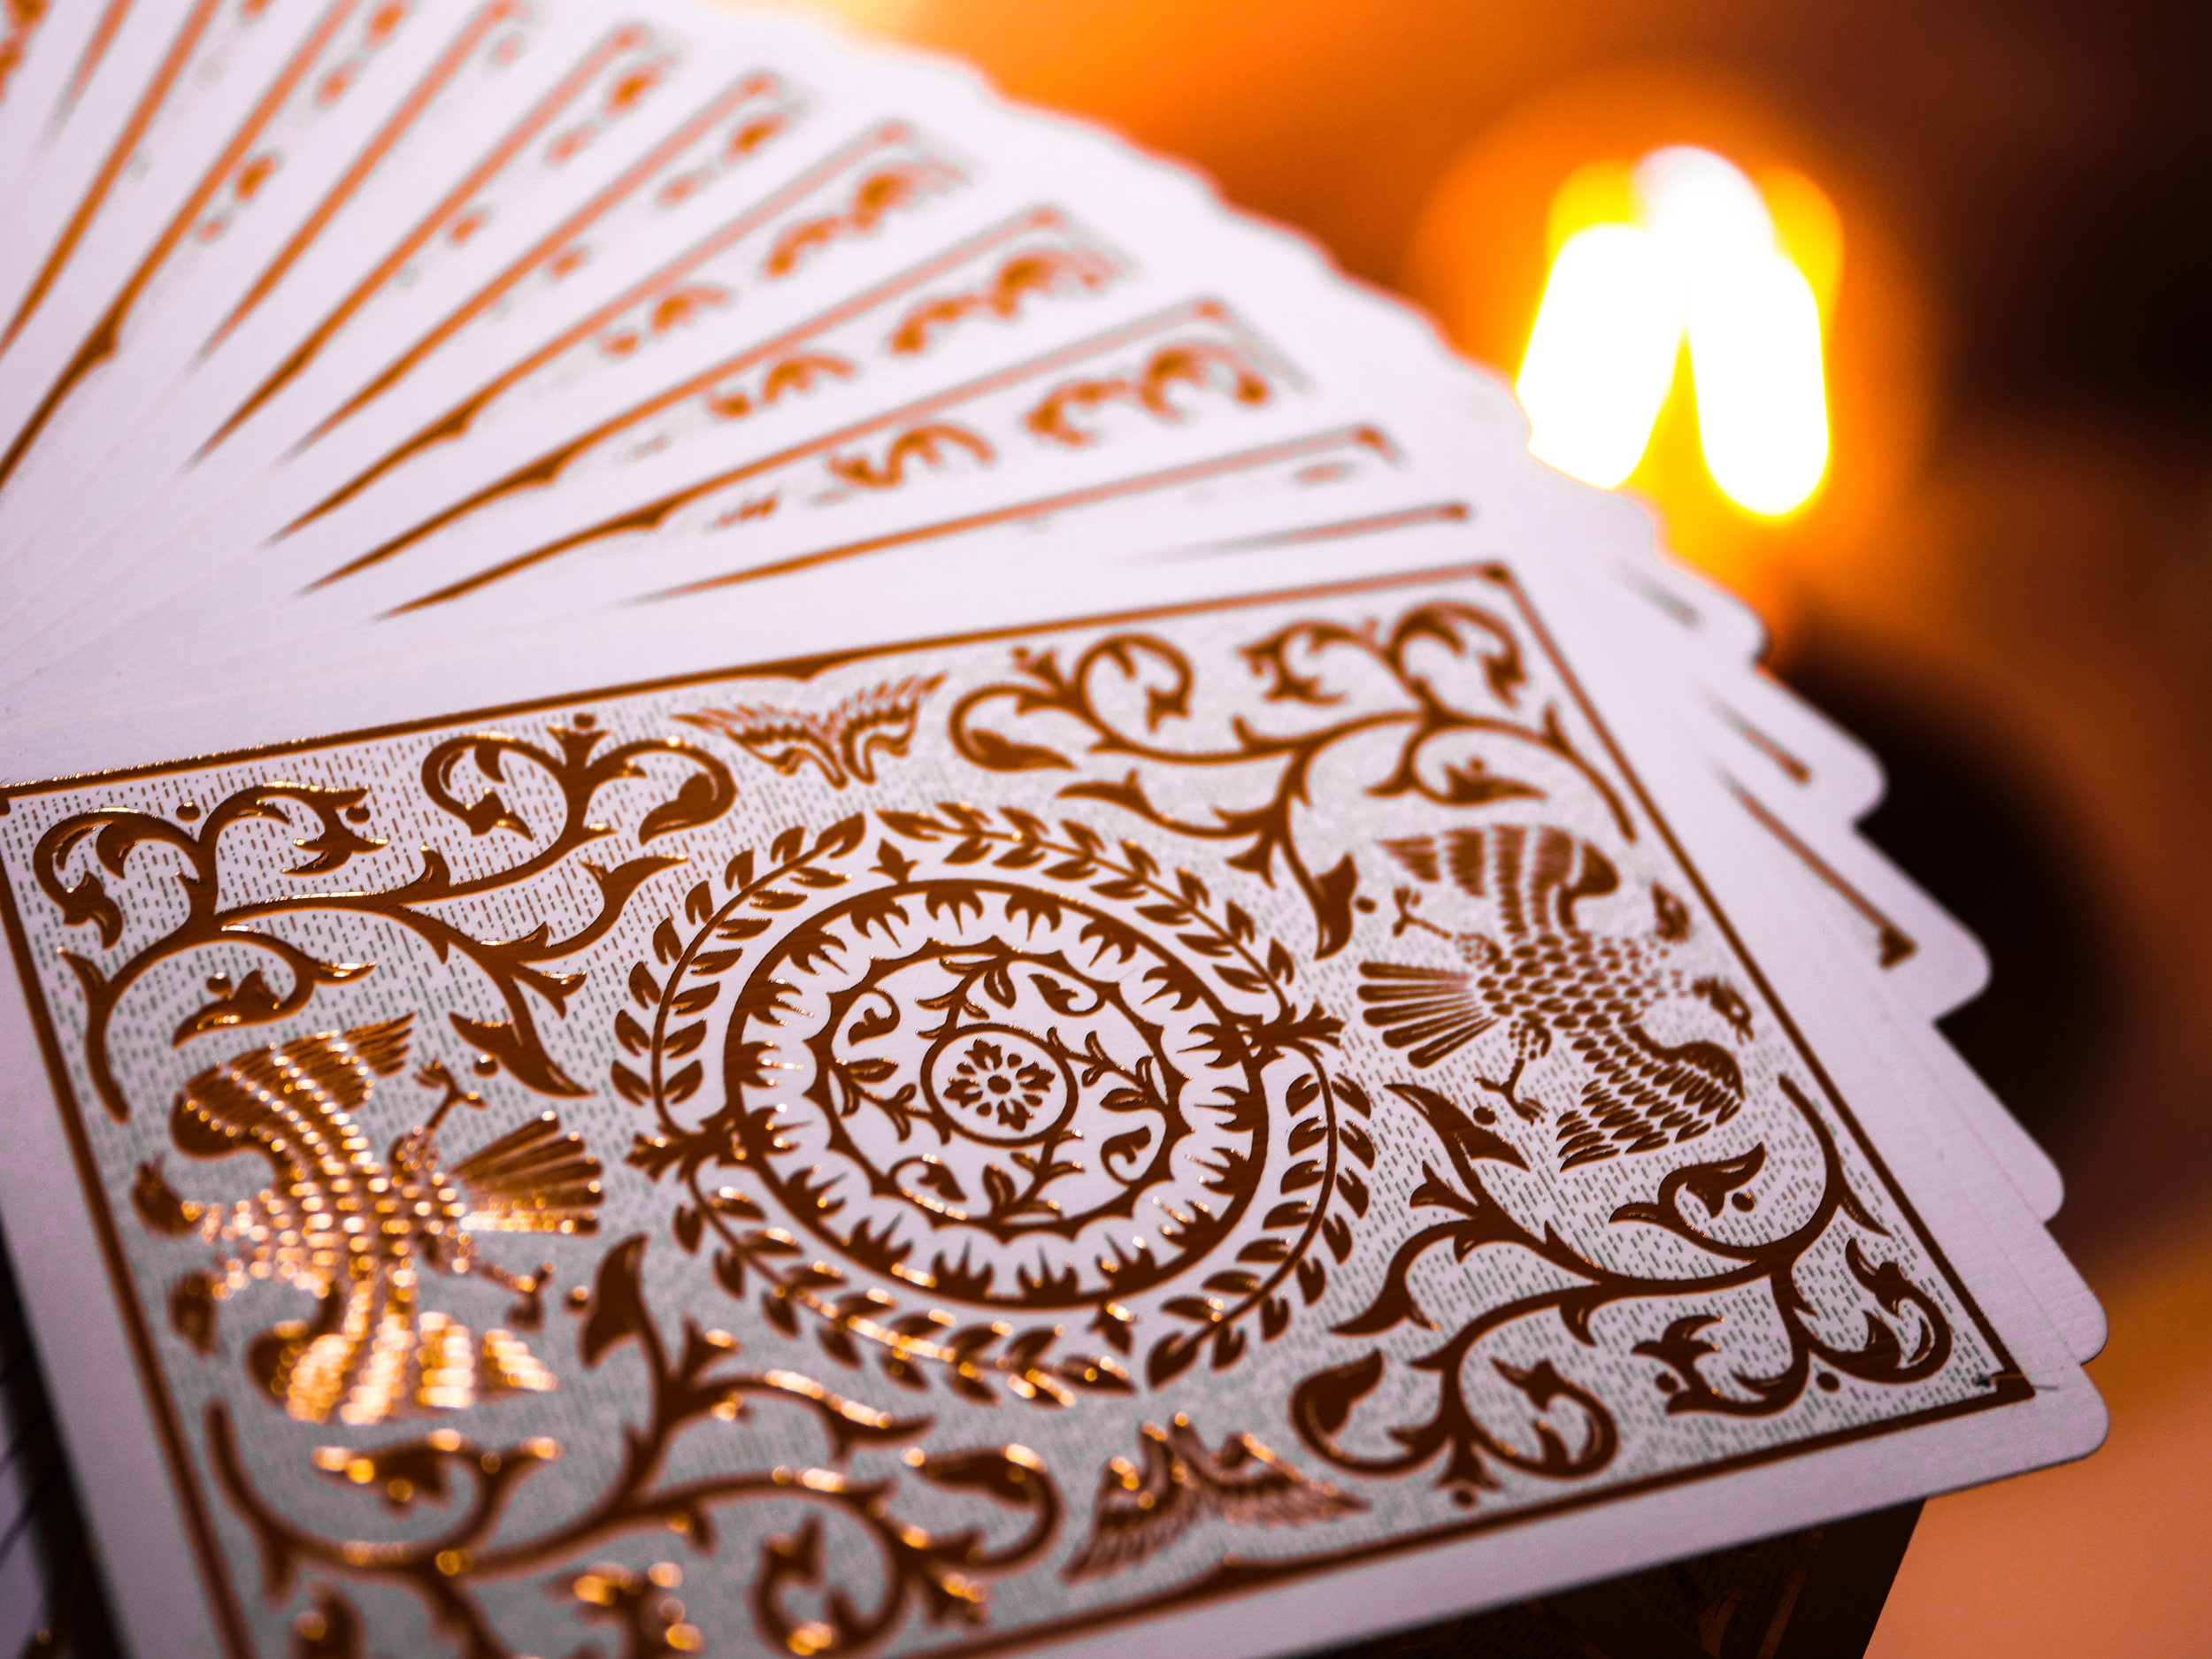 Regalia White Gold Luxury Playing Cards Poker Size Deck Shin Lim Cartamundi